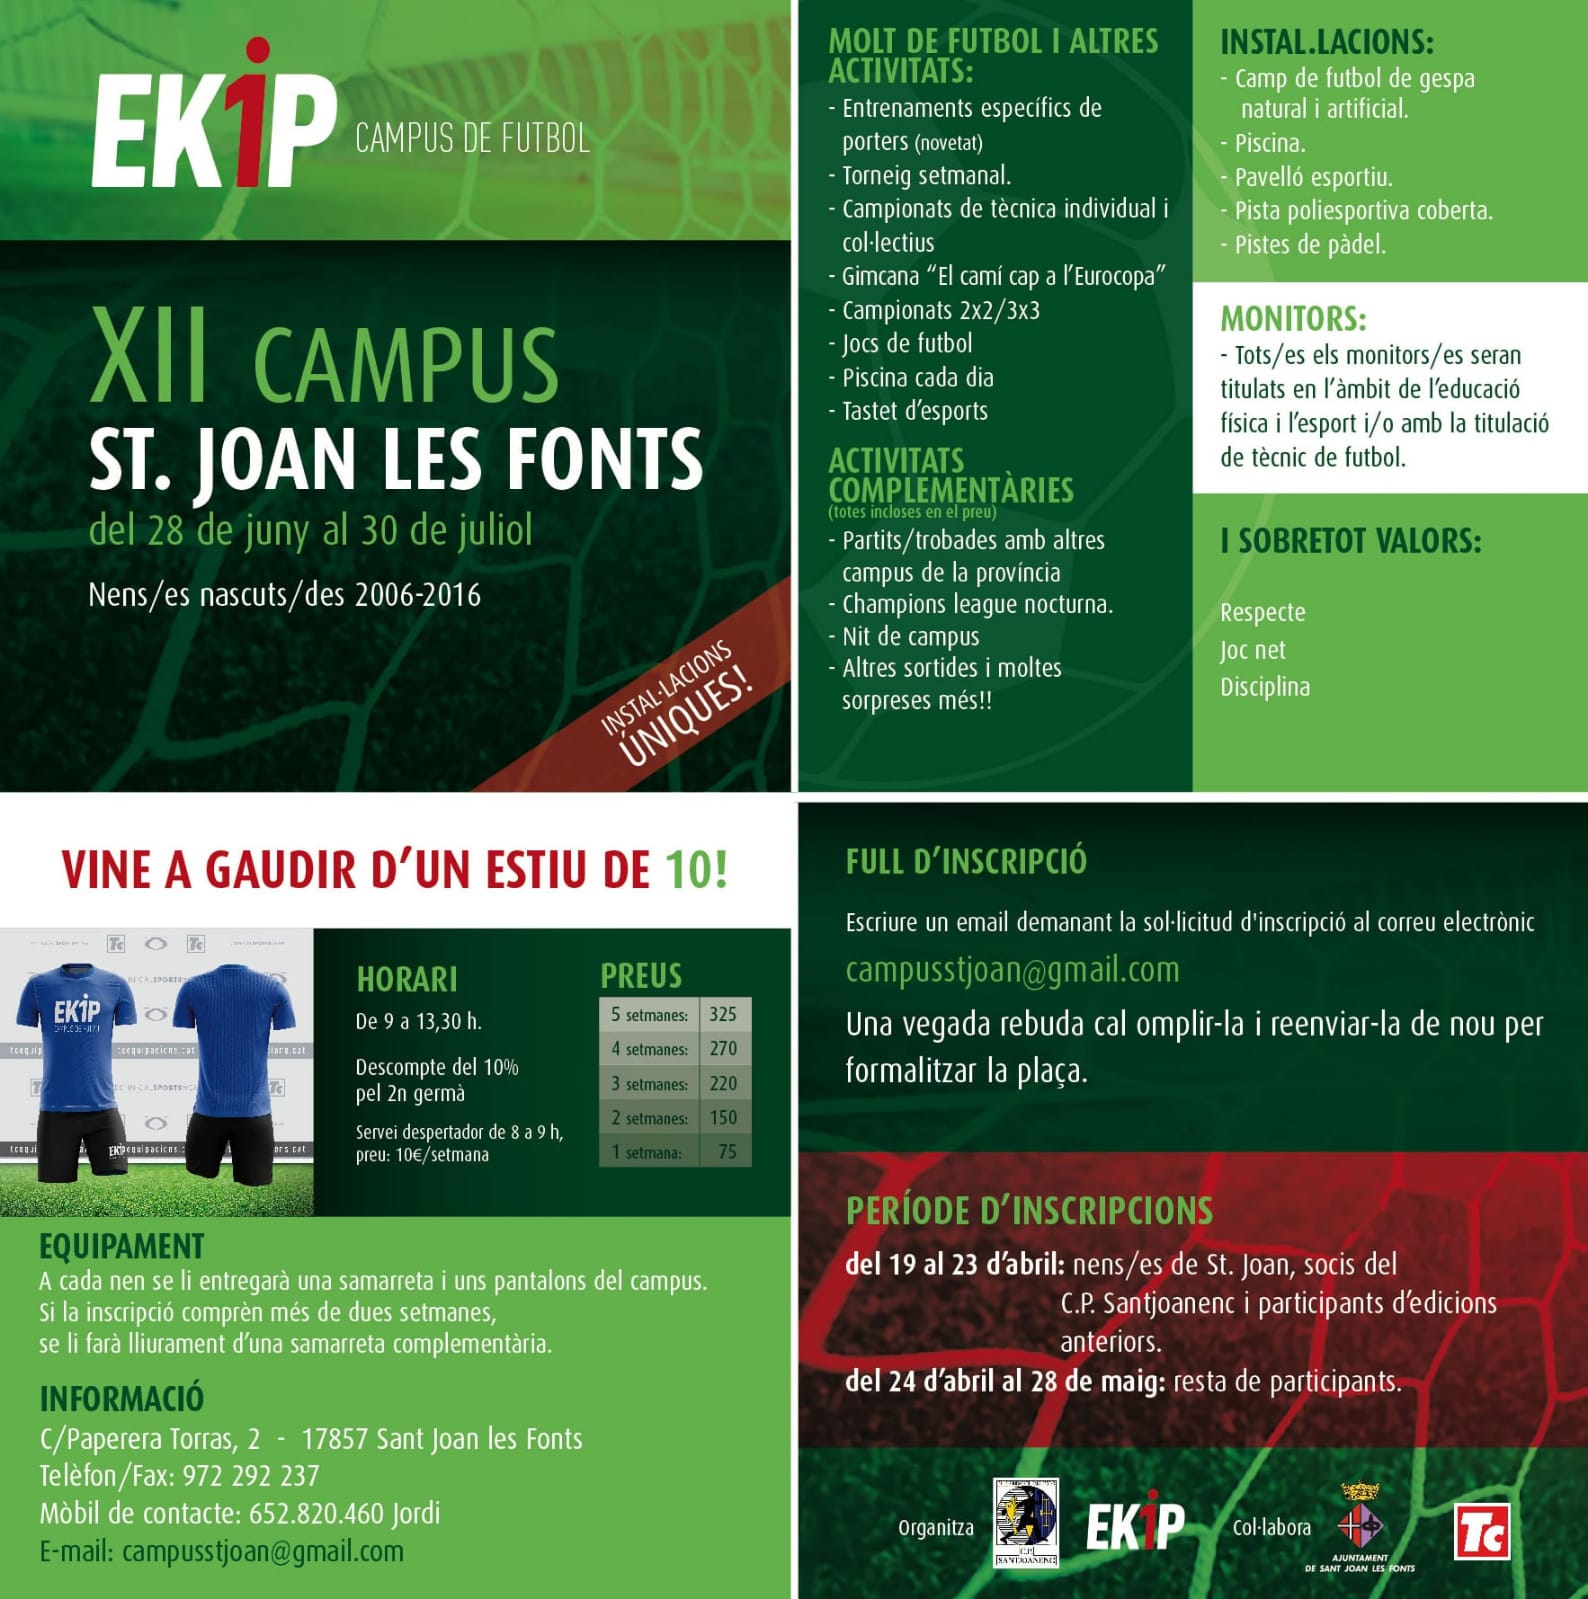 http://www.santjoanlesfonts.cat/media/sites/138/Cartell-campus-futbol.jpeg